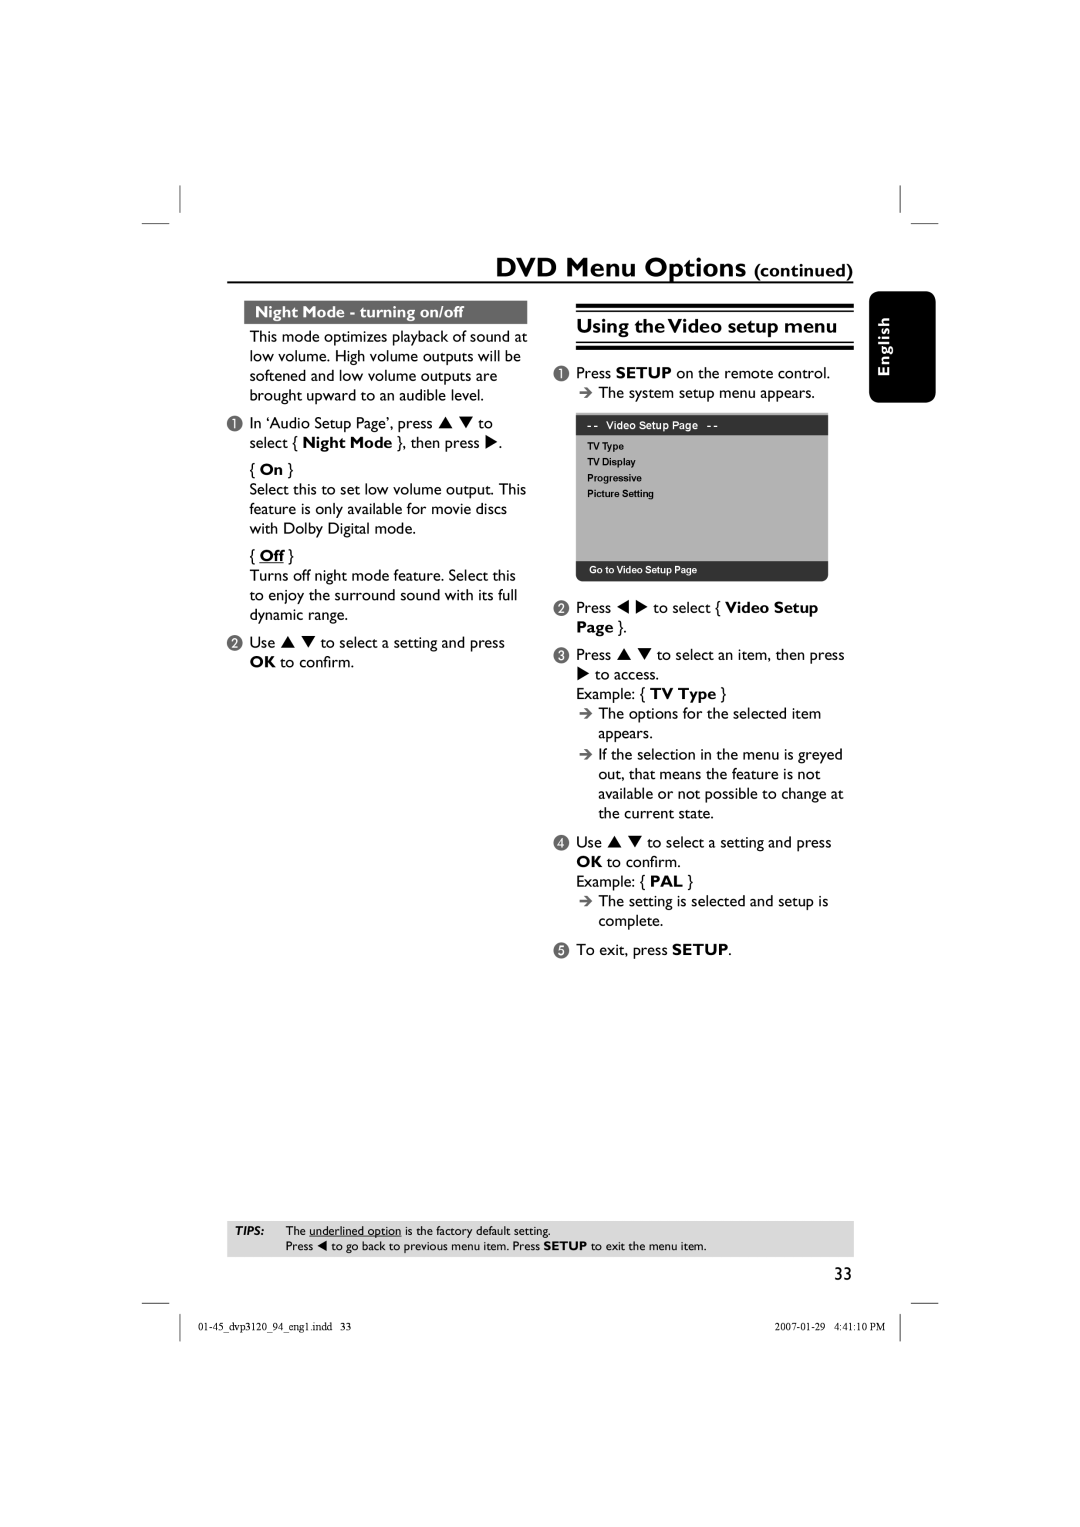 Philips DVP3721X/94 Using the Video setup menu, Night Mode - turning on/off, DVD Menu Options continued, English 